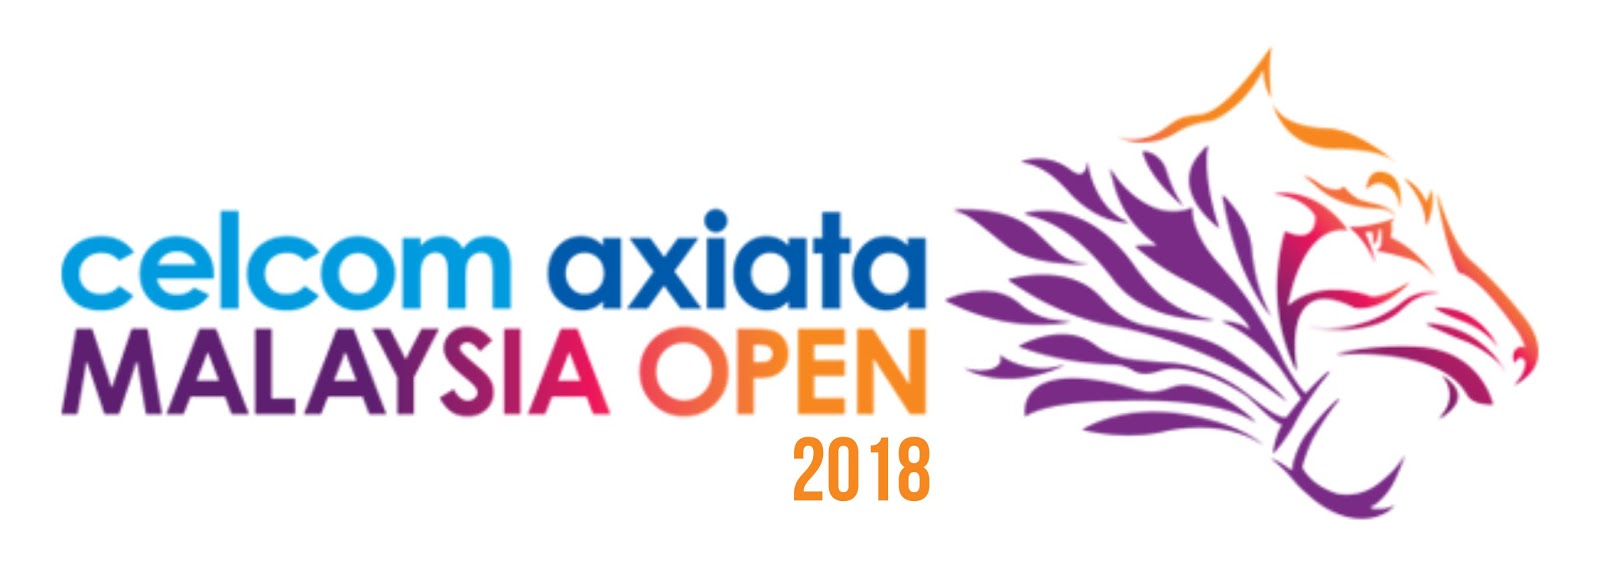 Jadwal Celcom Axiata Malaysia Open 2018 Super 750 Terbaru | Natarizqi